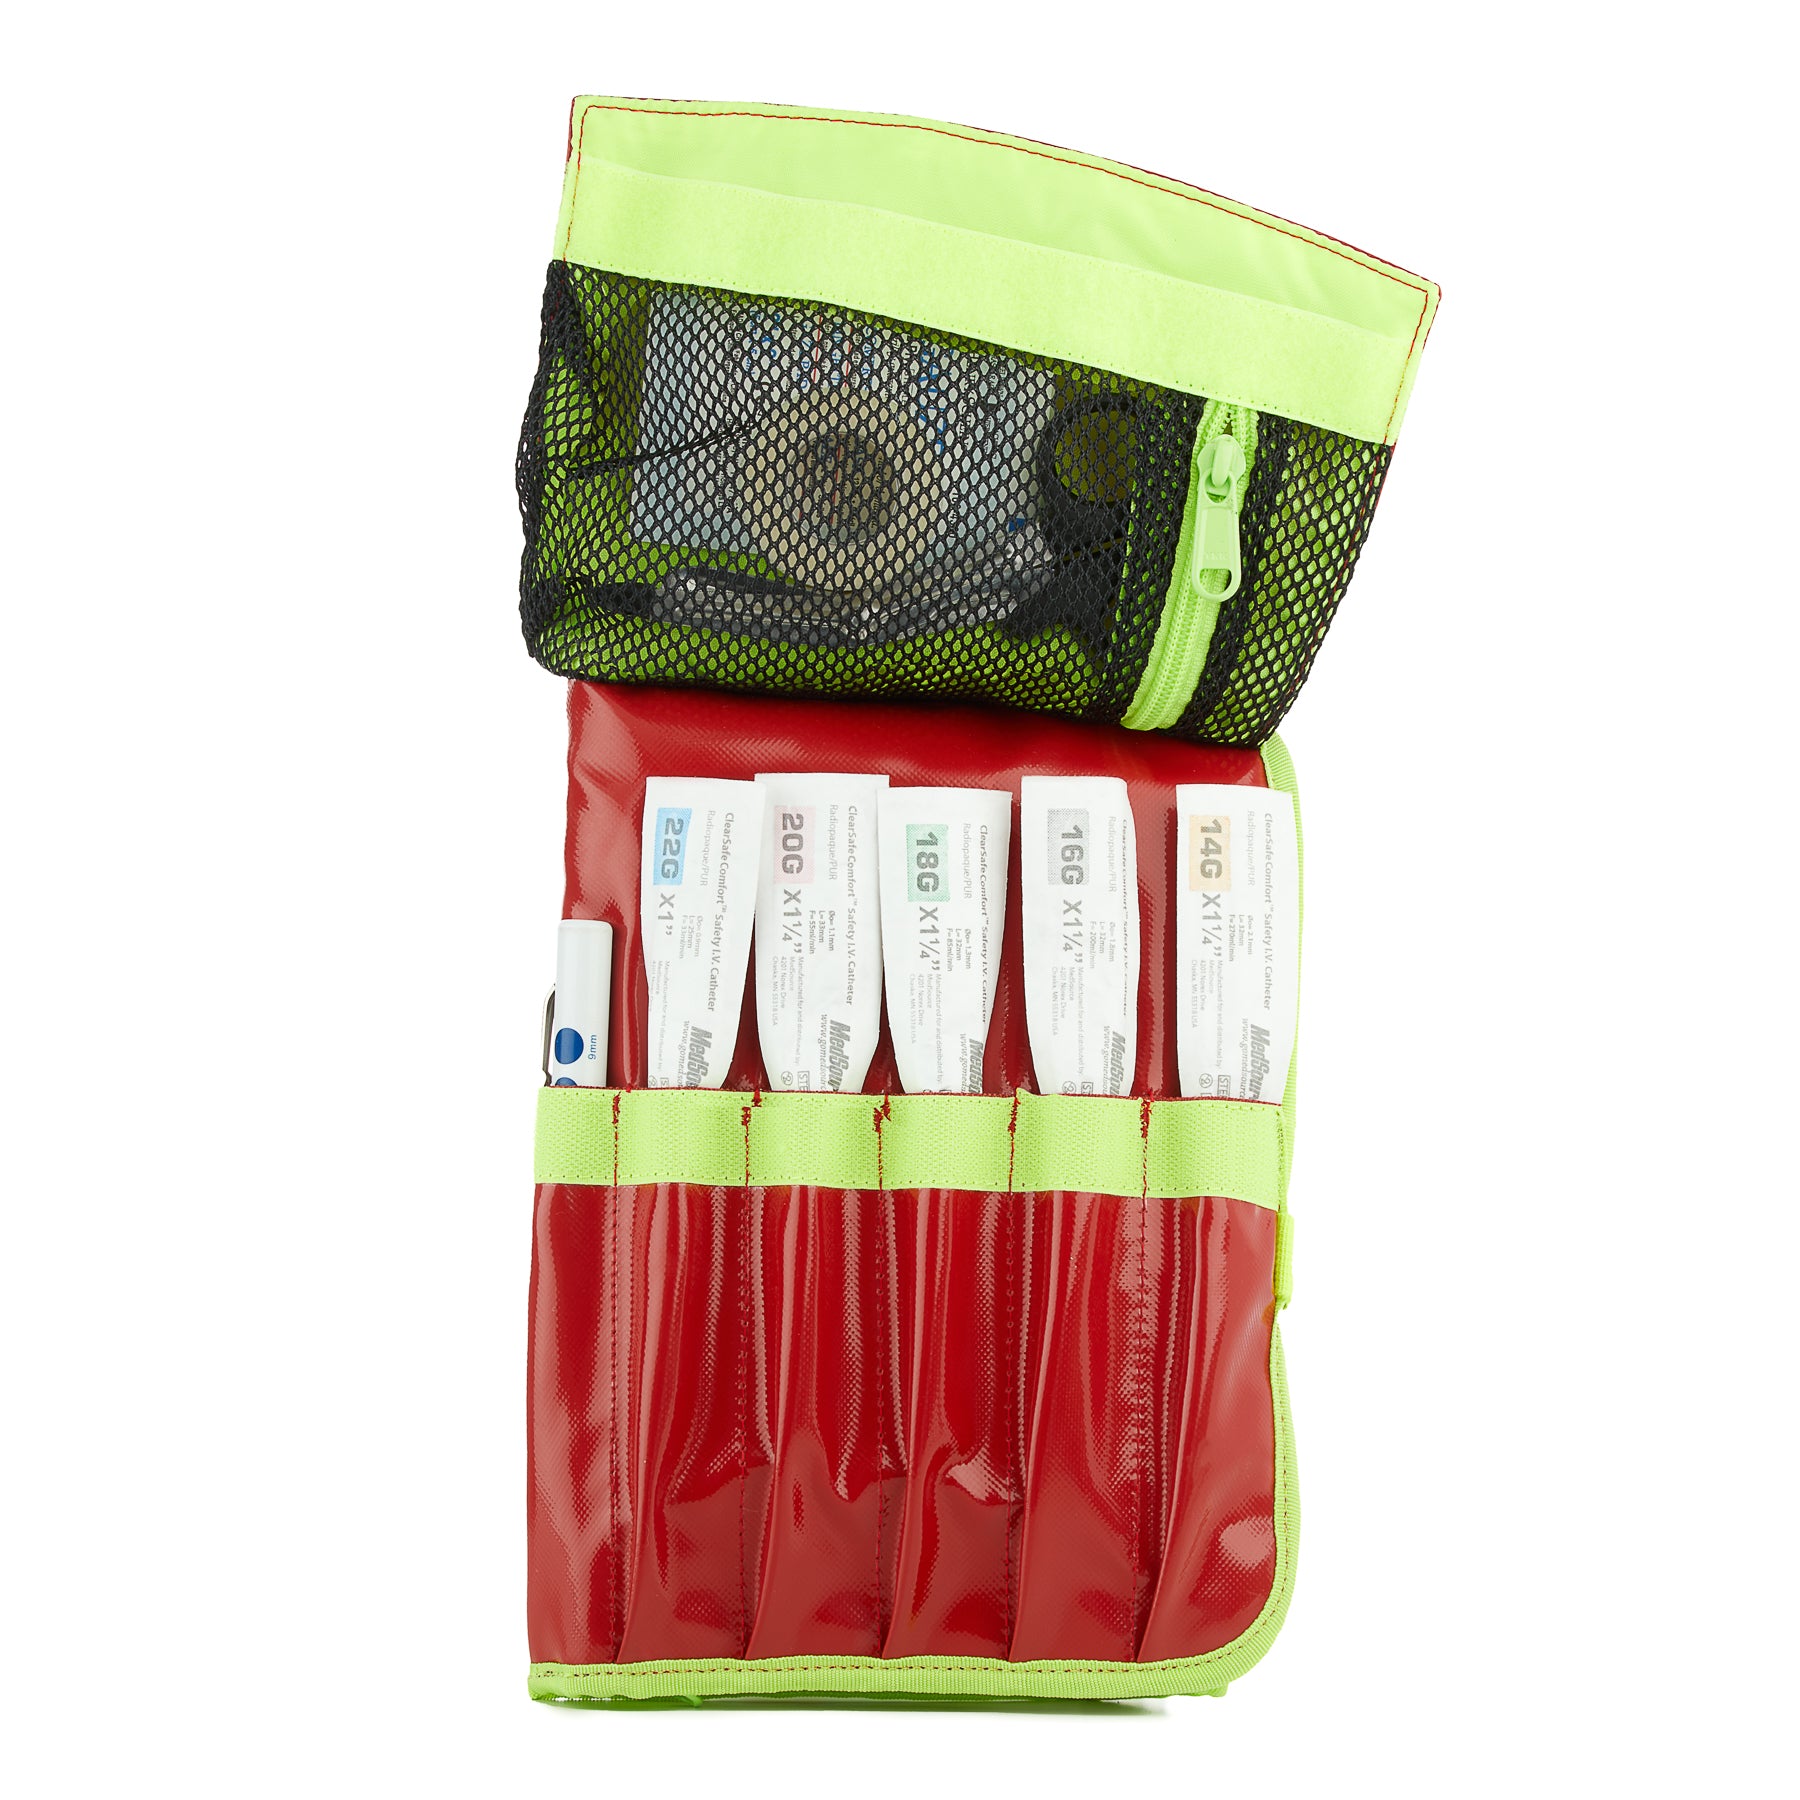 Statpacks G3+ Circulatory Kit, Red